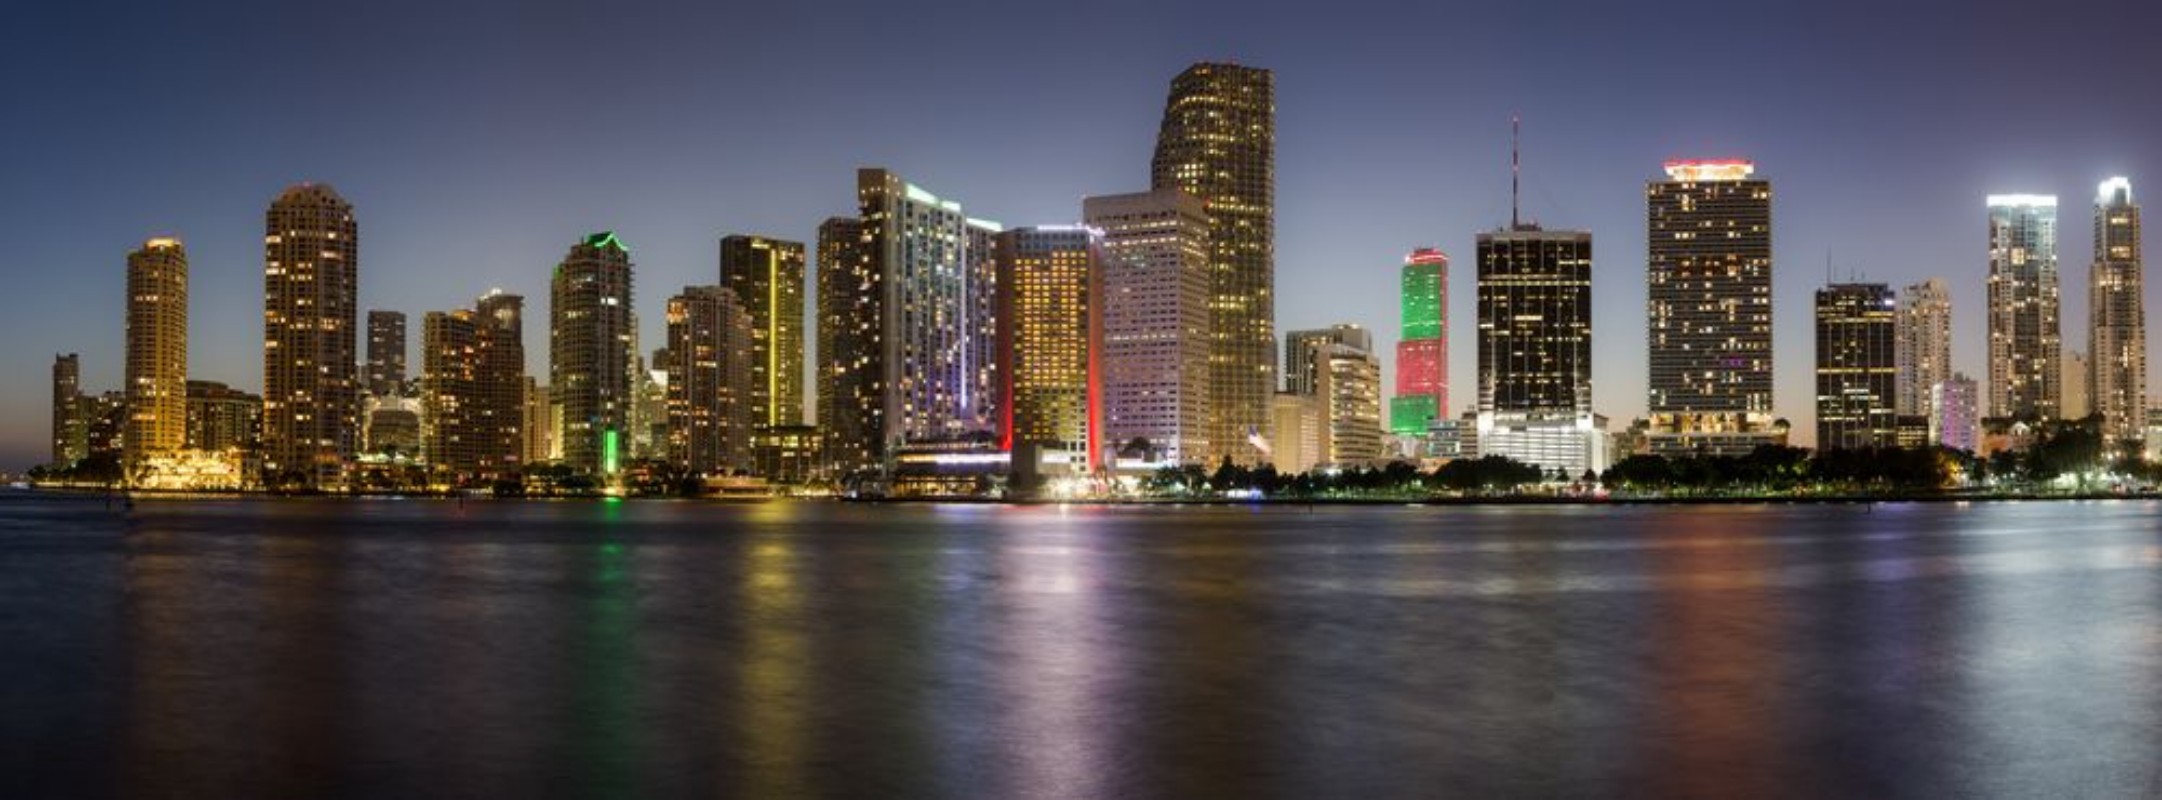 Afbeeldingen van Miami Florida USA downtown skyline